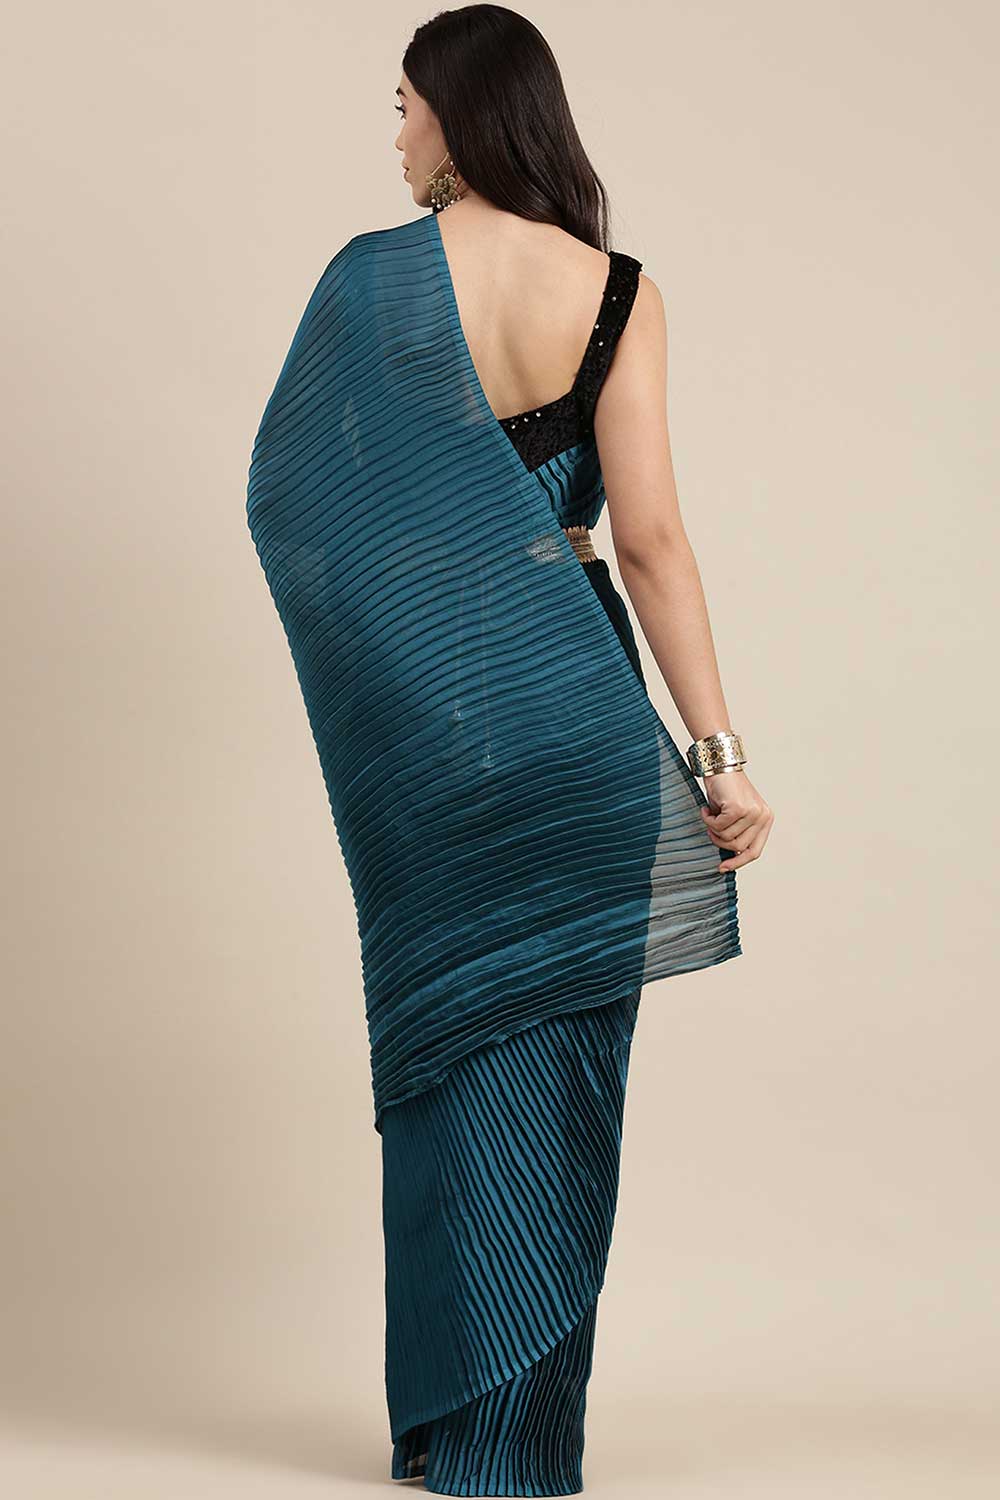 Buy Georgette Solid Saree in Teal blue Online - Back